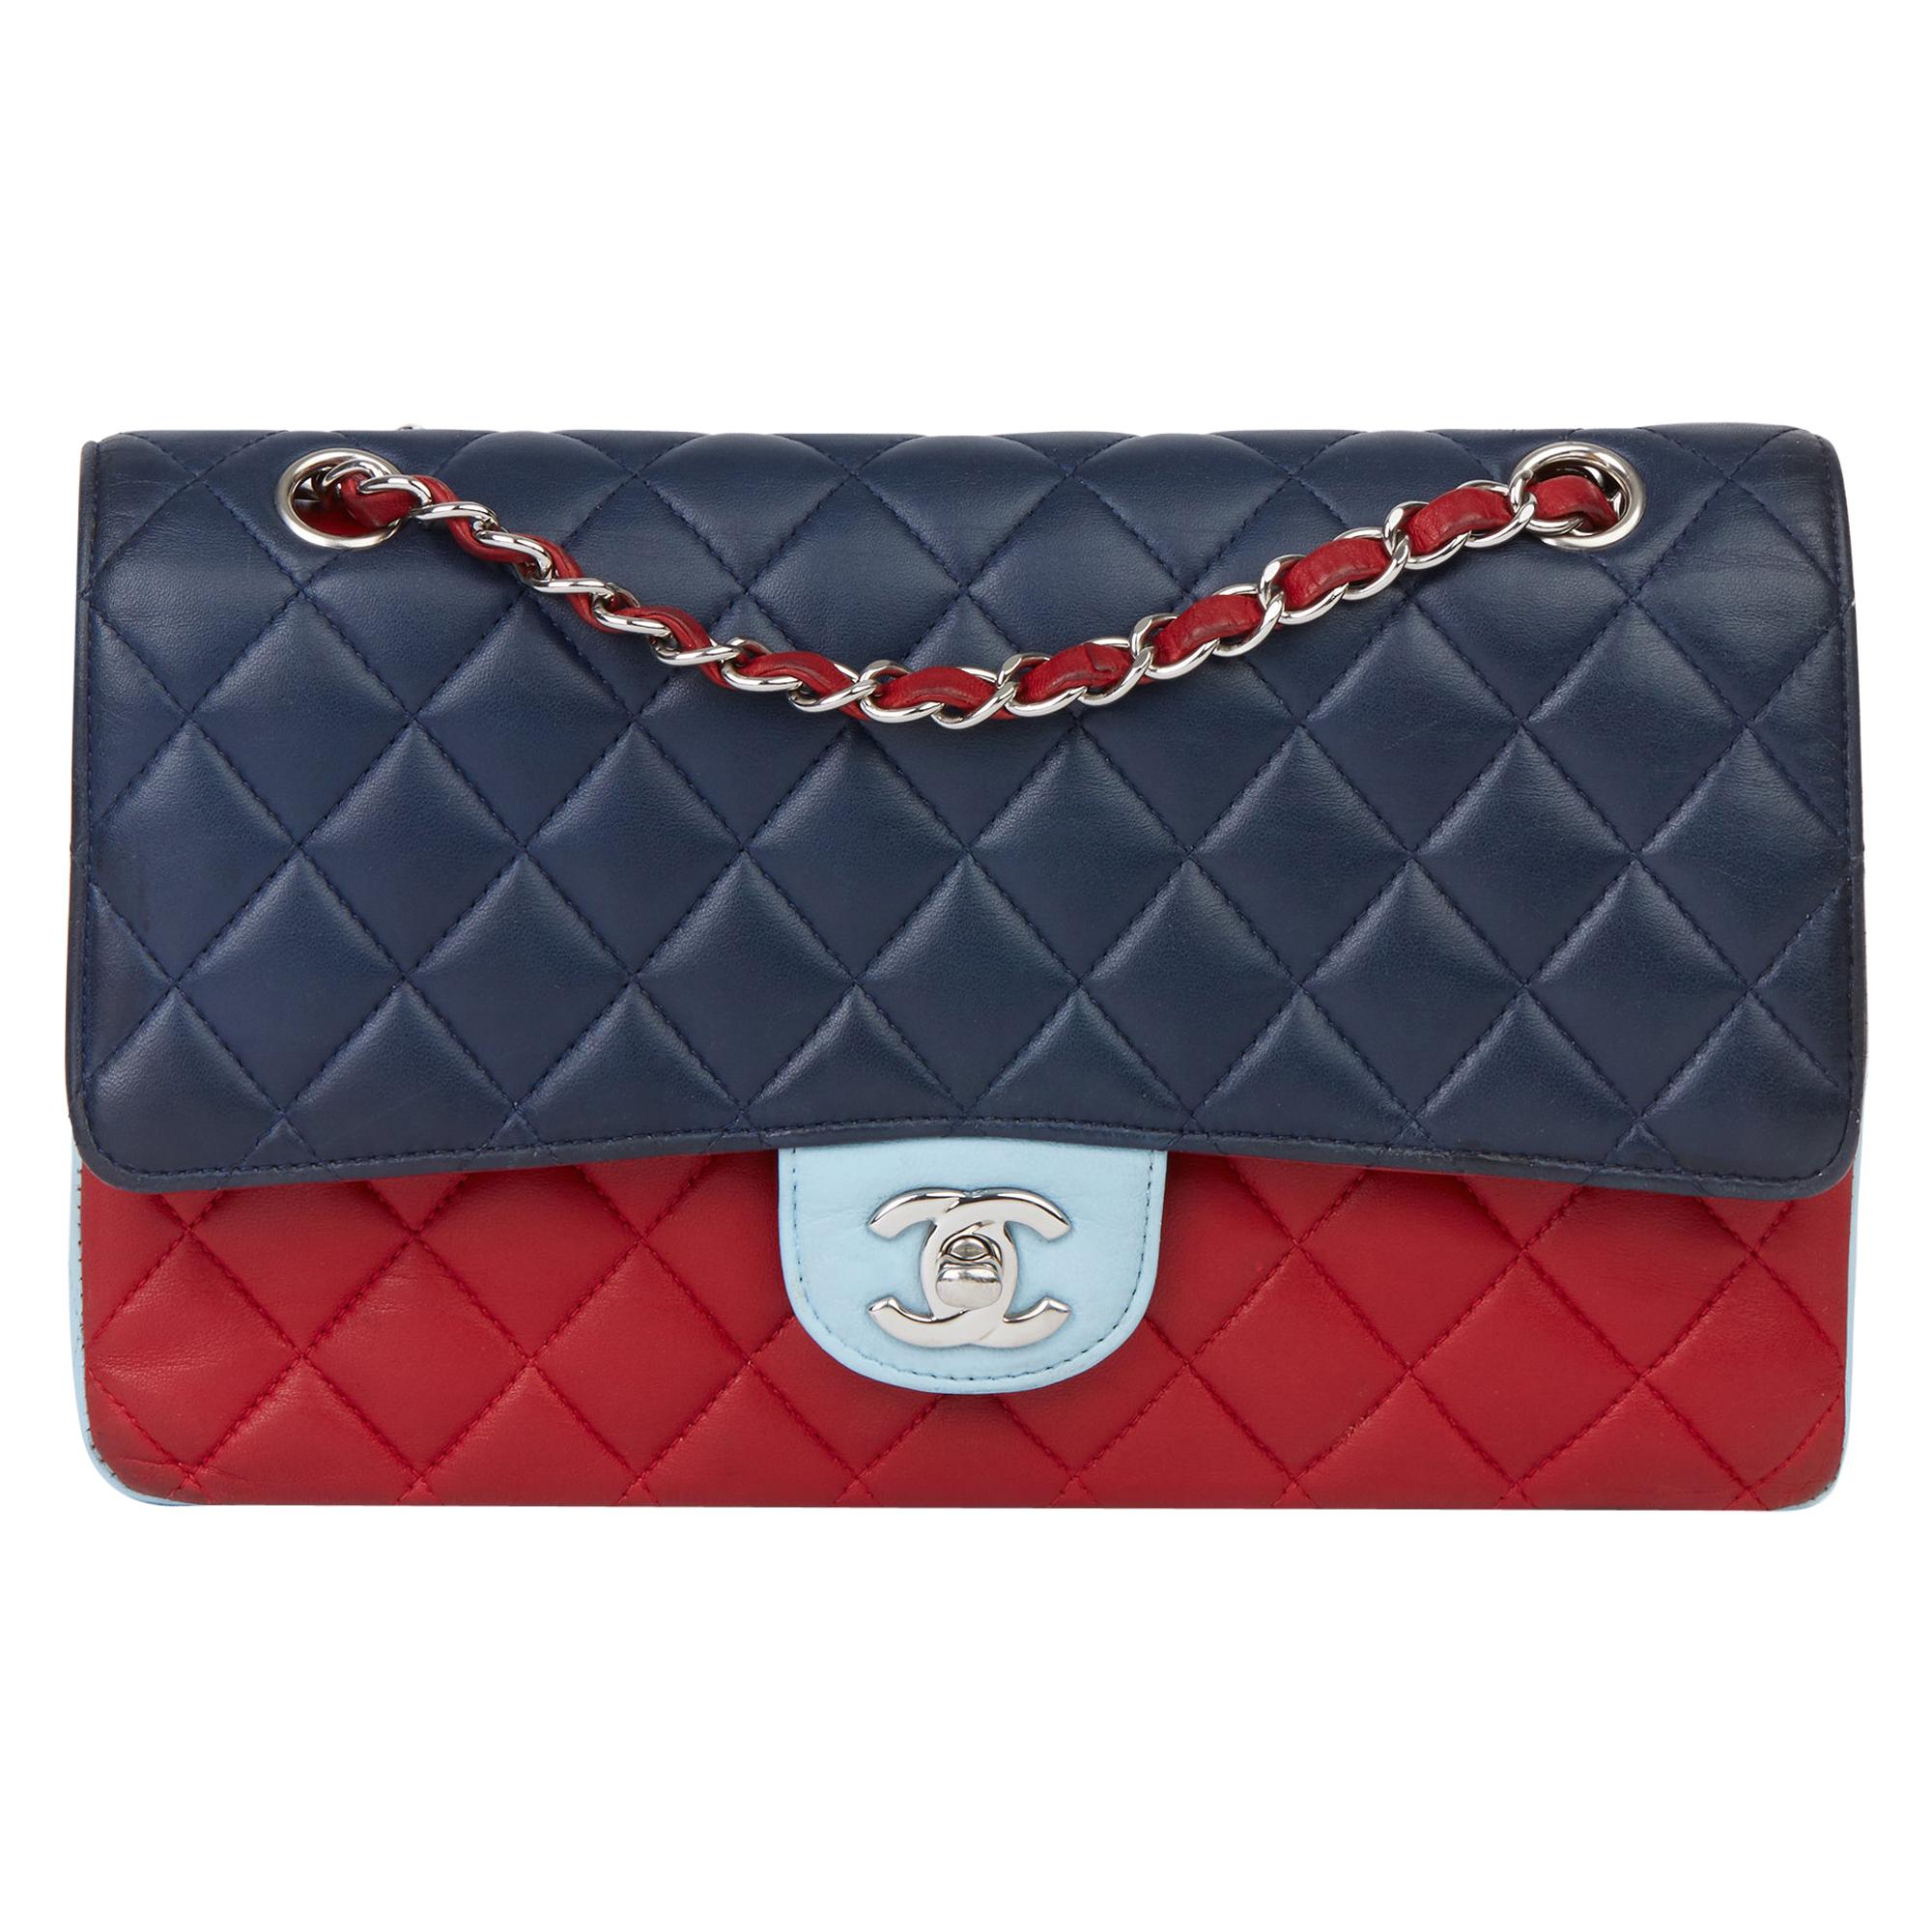 2016 Chanel Red, Navy & Light Blue Lambskin Medium Classic Double Flap Bag 